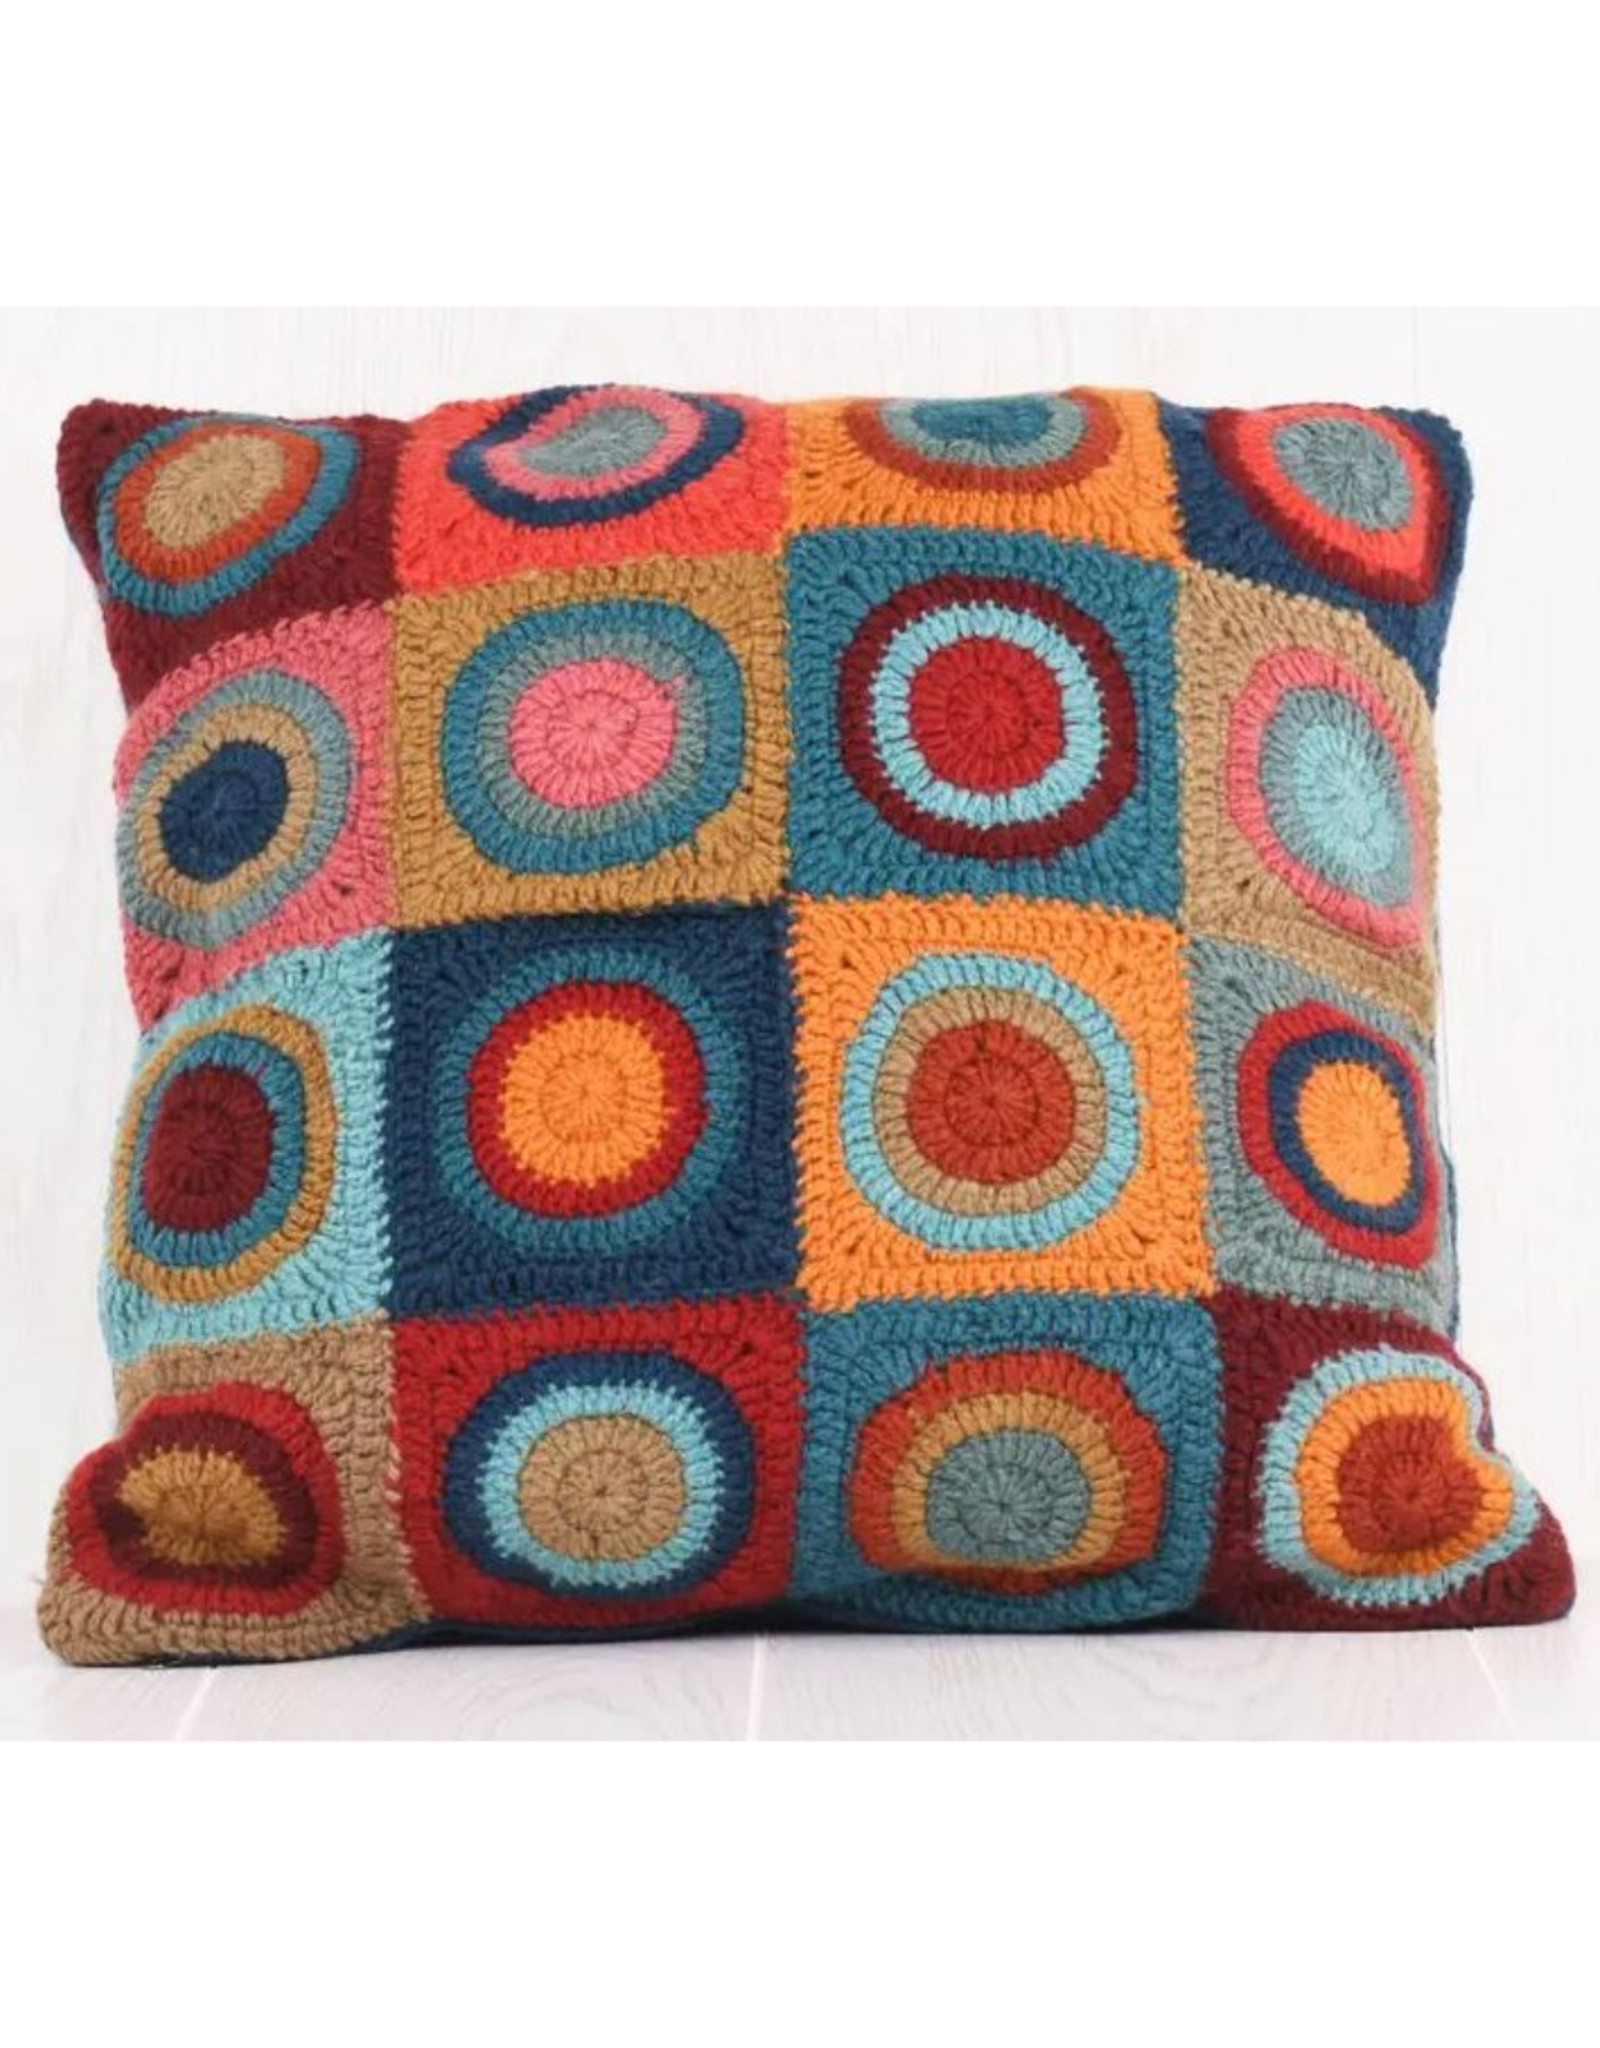 Wool Crochet Throw Pillow with Geometric Design